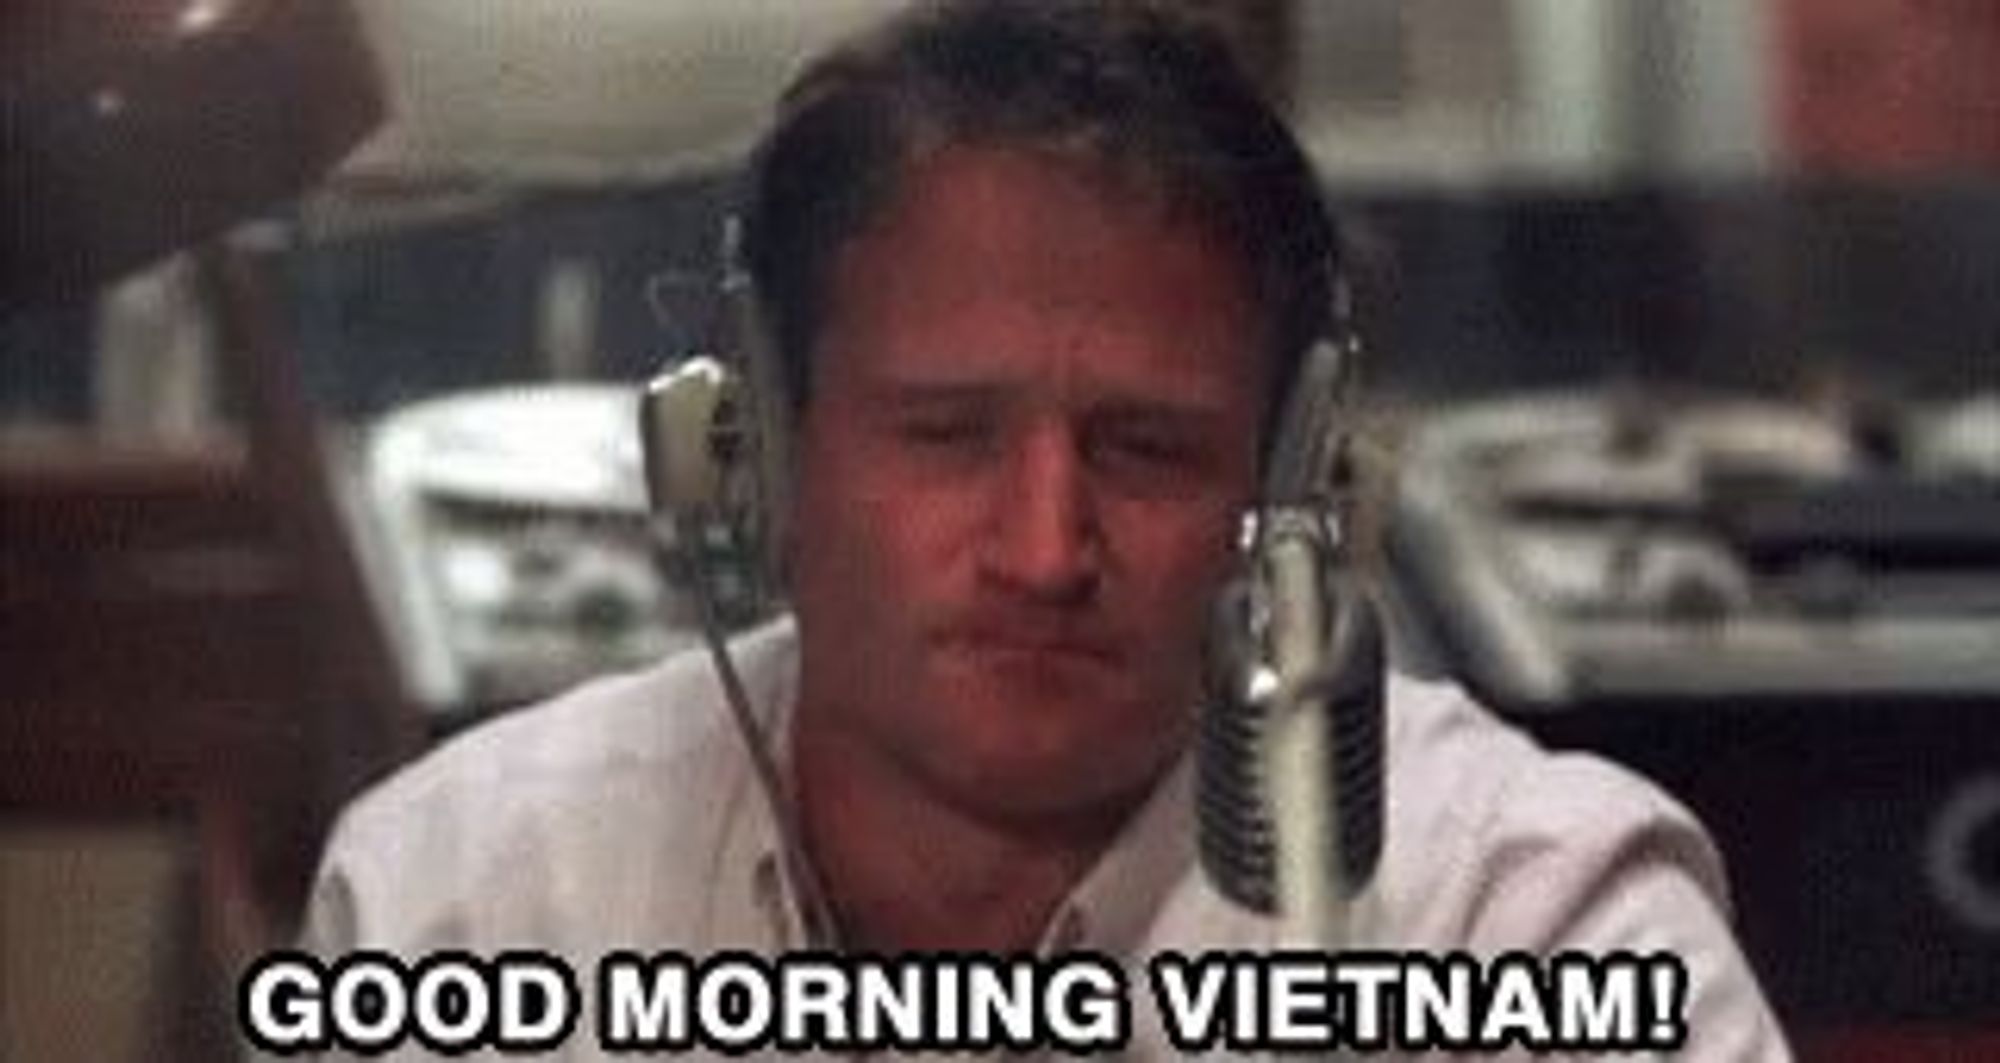 Good morning vietnam sabbath. Робин Уильямс доброе утро Вьетнам. Робин Уильямс Гуд Монинг.